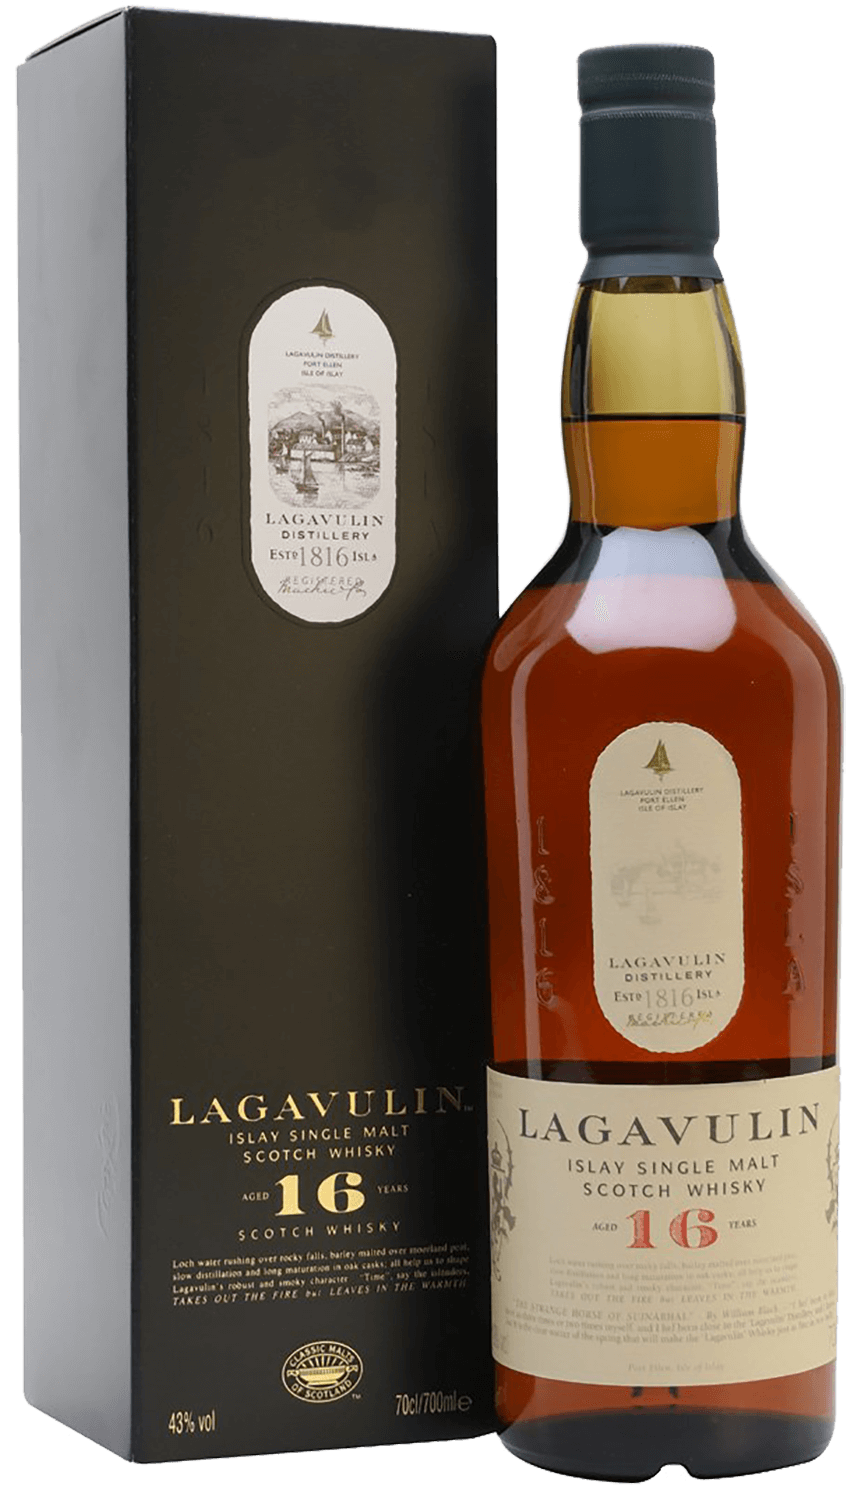 Lagavulin Islay single malt scotch whisky 16 Years Old (gift box) craigellachie 13 years old speyside single malt scotch whisky gift box